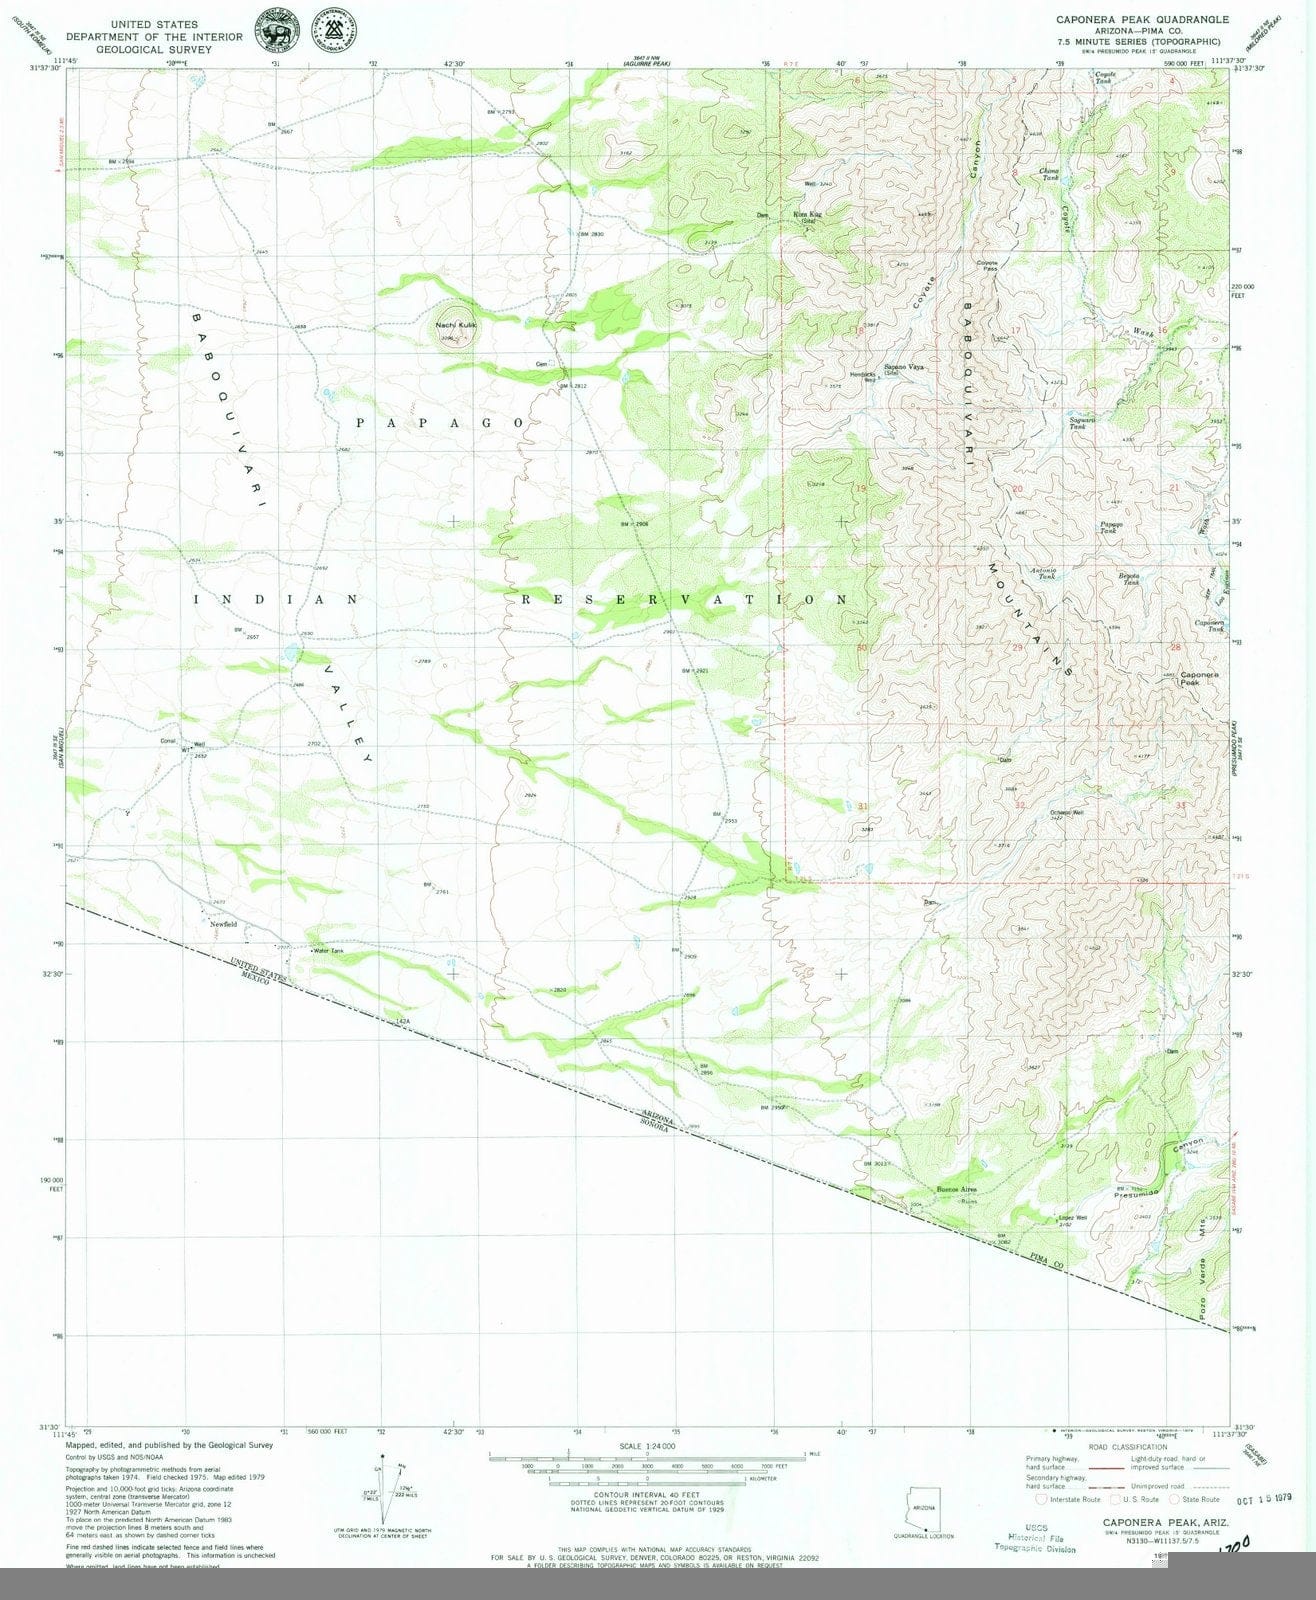 1979 Caponera Peak, AZ - Arizona - USGS Topographic Map